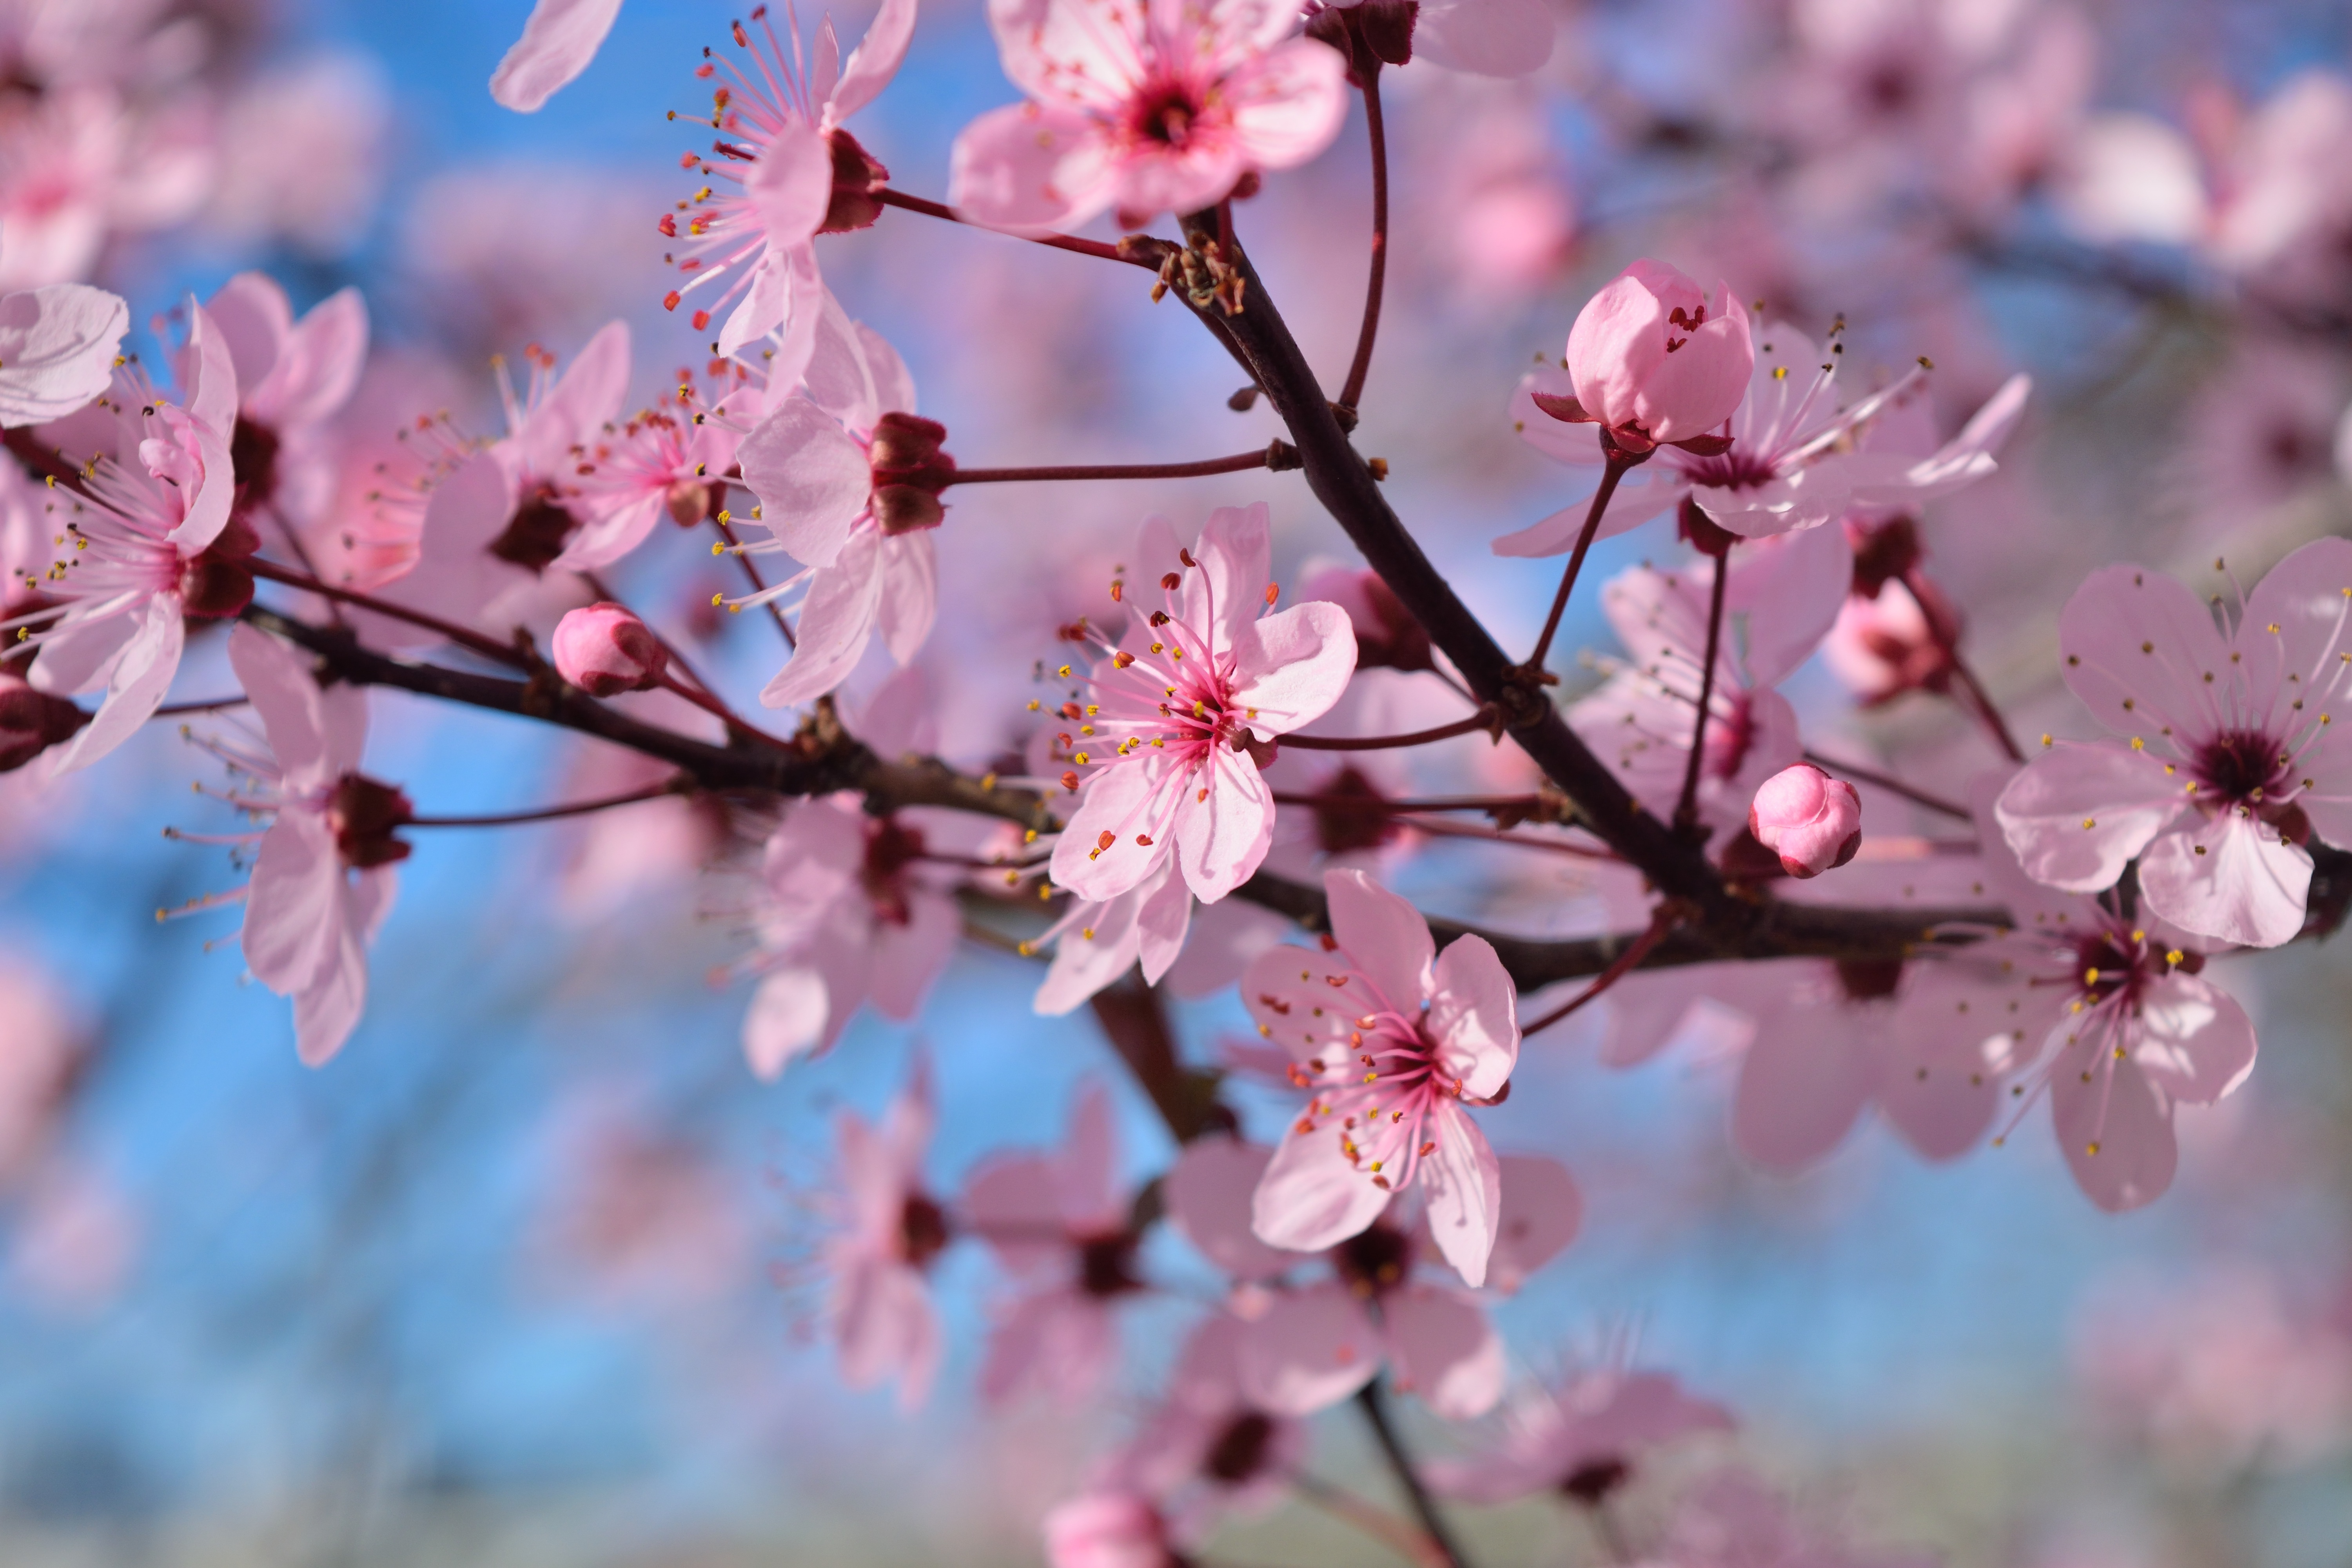 Фото весны красивые на заставку на телефон. Вишня черри блоссом. Черри блоссом цветок. Сакура черри блоссом дерево. Цветущая вишня Сакура.